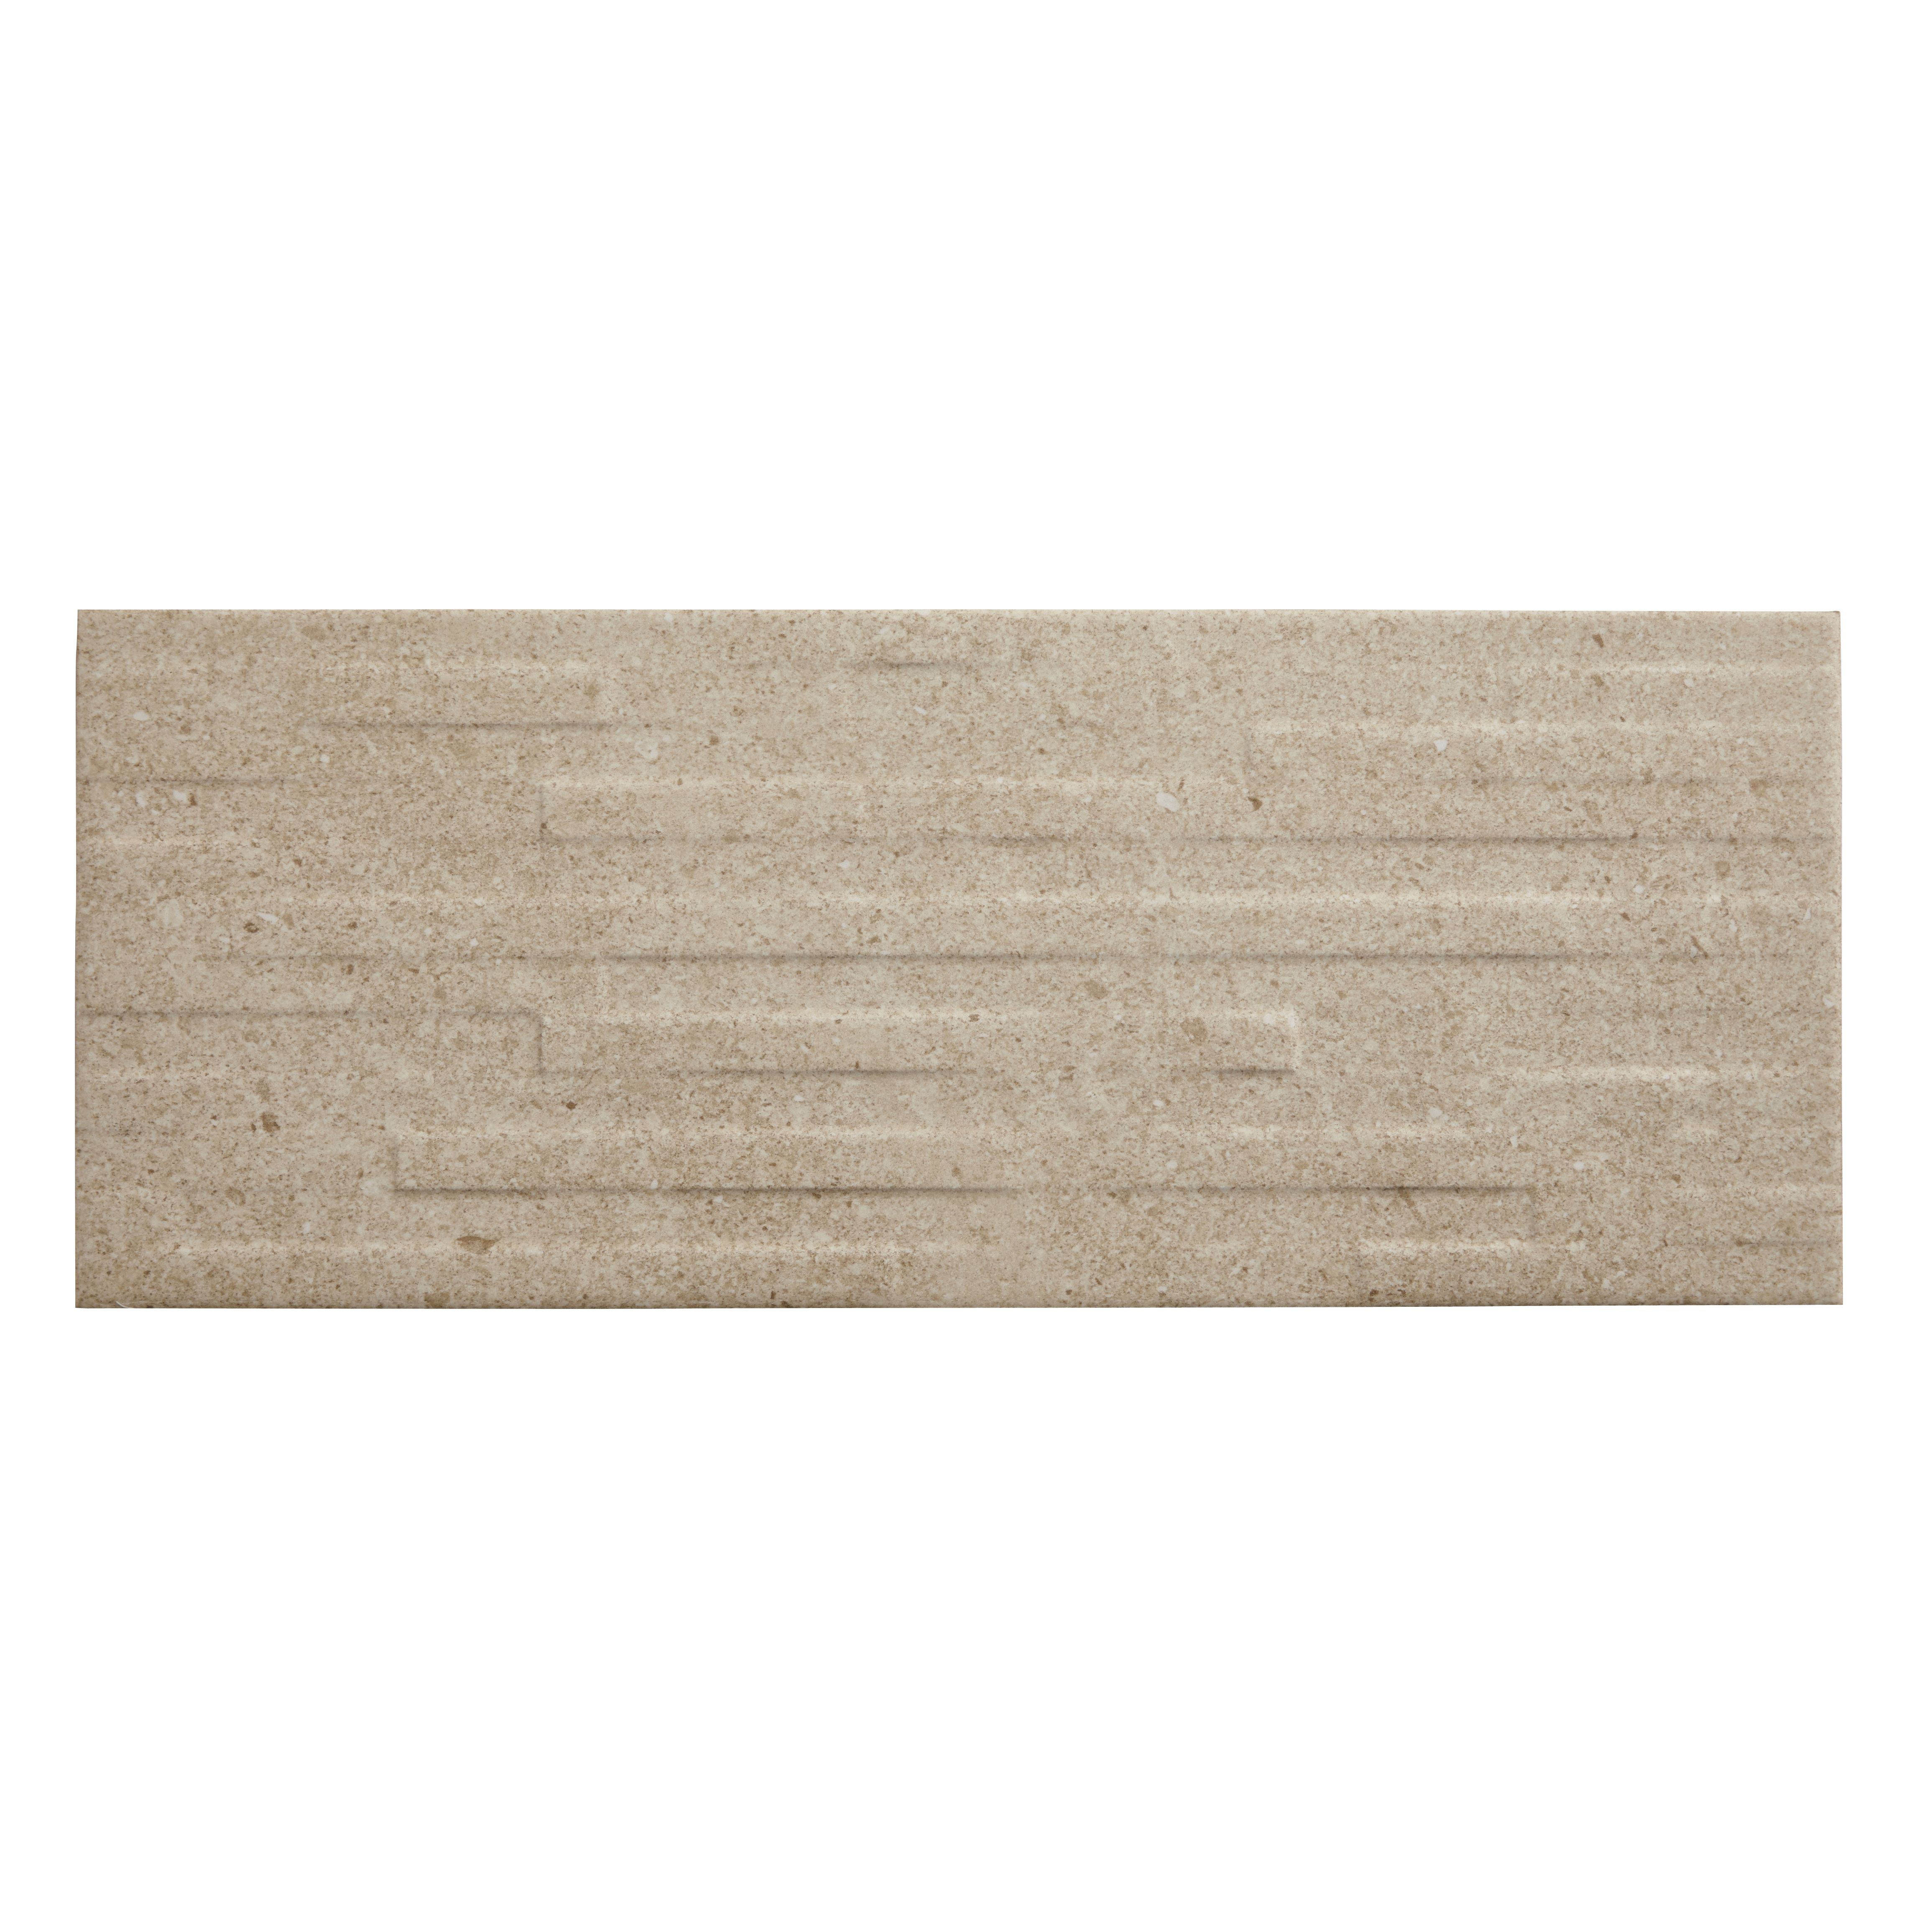 Milestone Beige Linear Ceramic Wall tile, 1, Sample